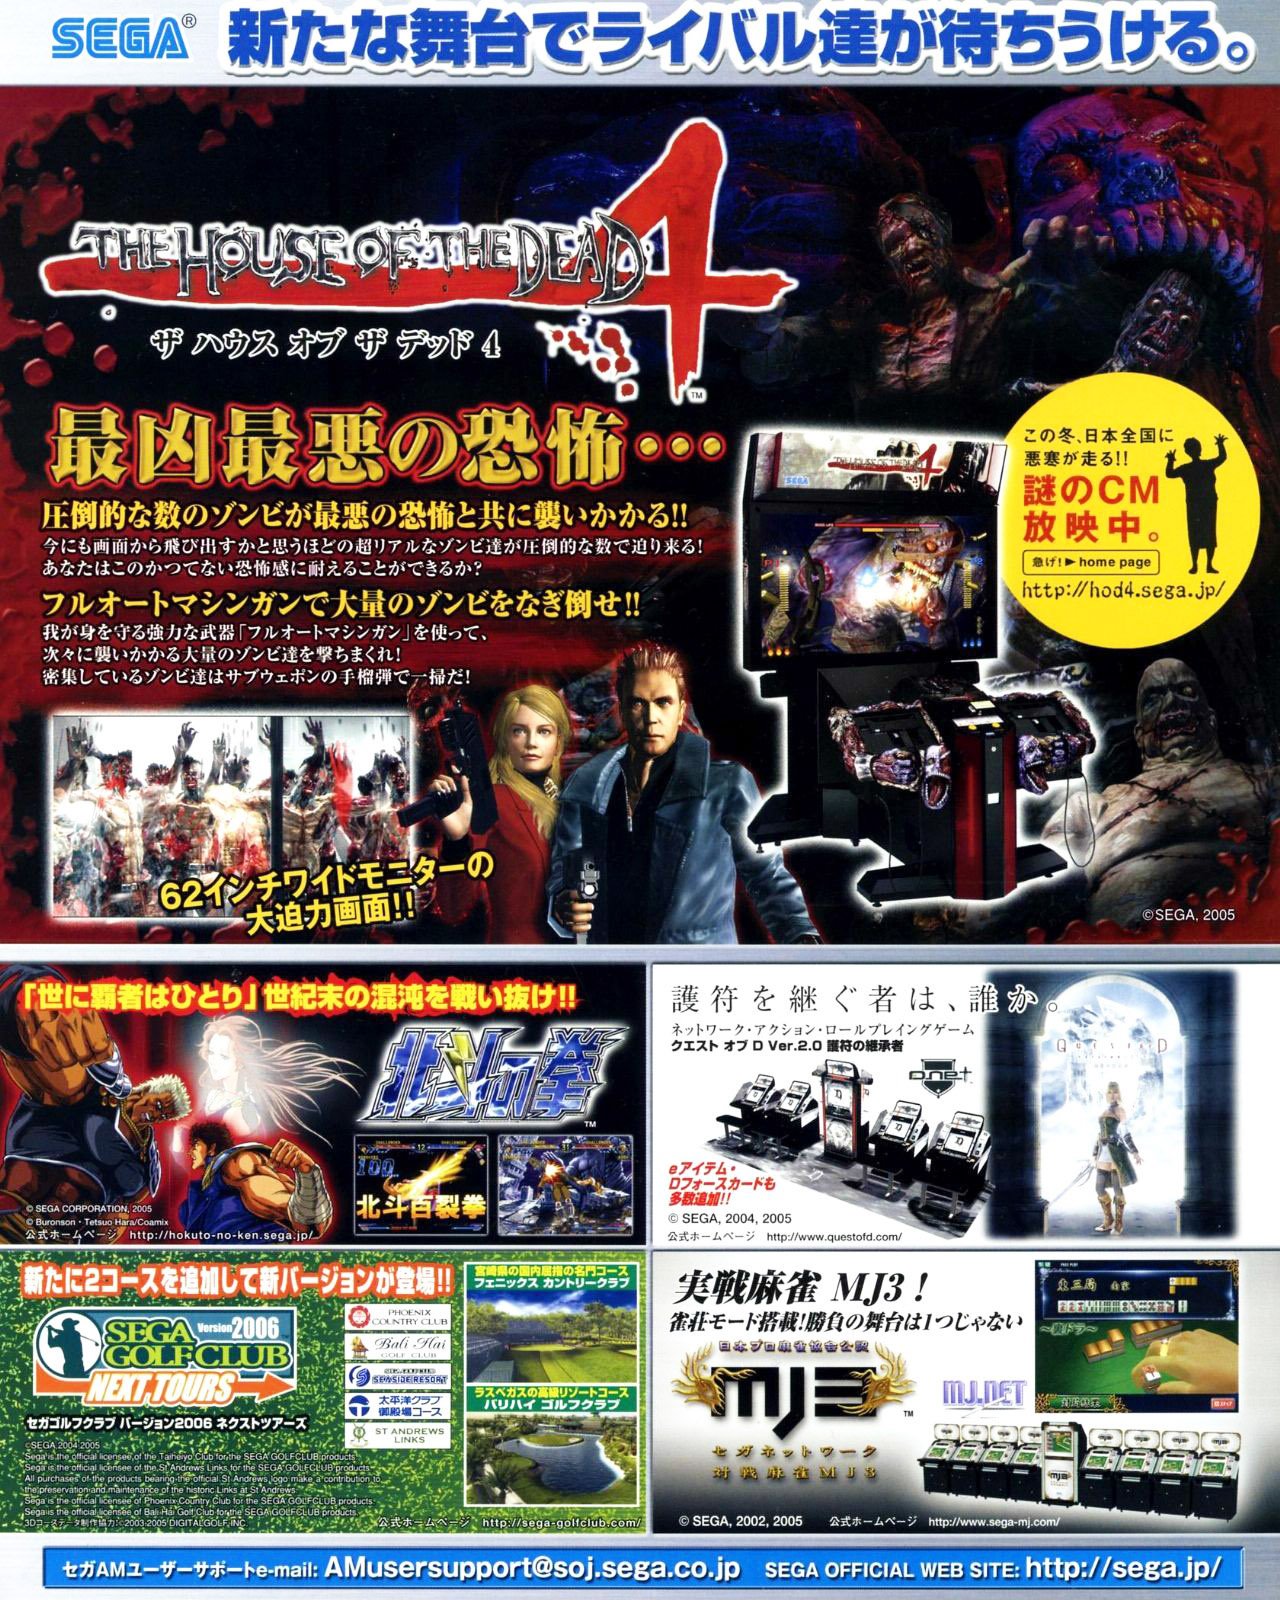 House of the Dead 4, Hokuto no Ken, Sega Golf Club Version 2006 Next Tours, Quest of D, MJ3 (Japan)